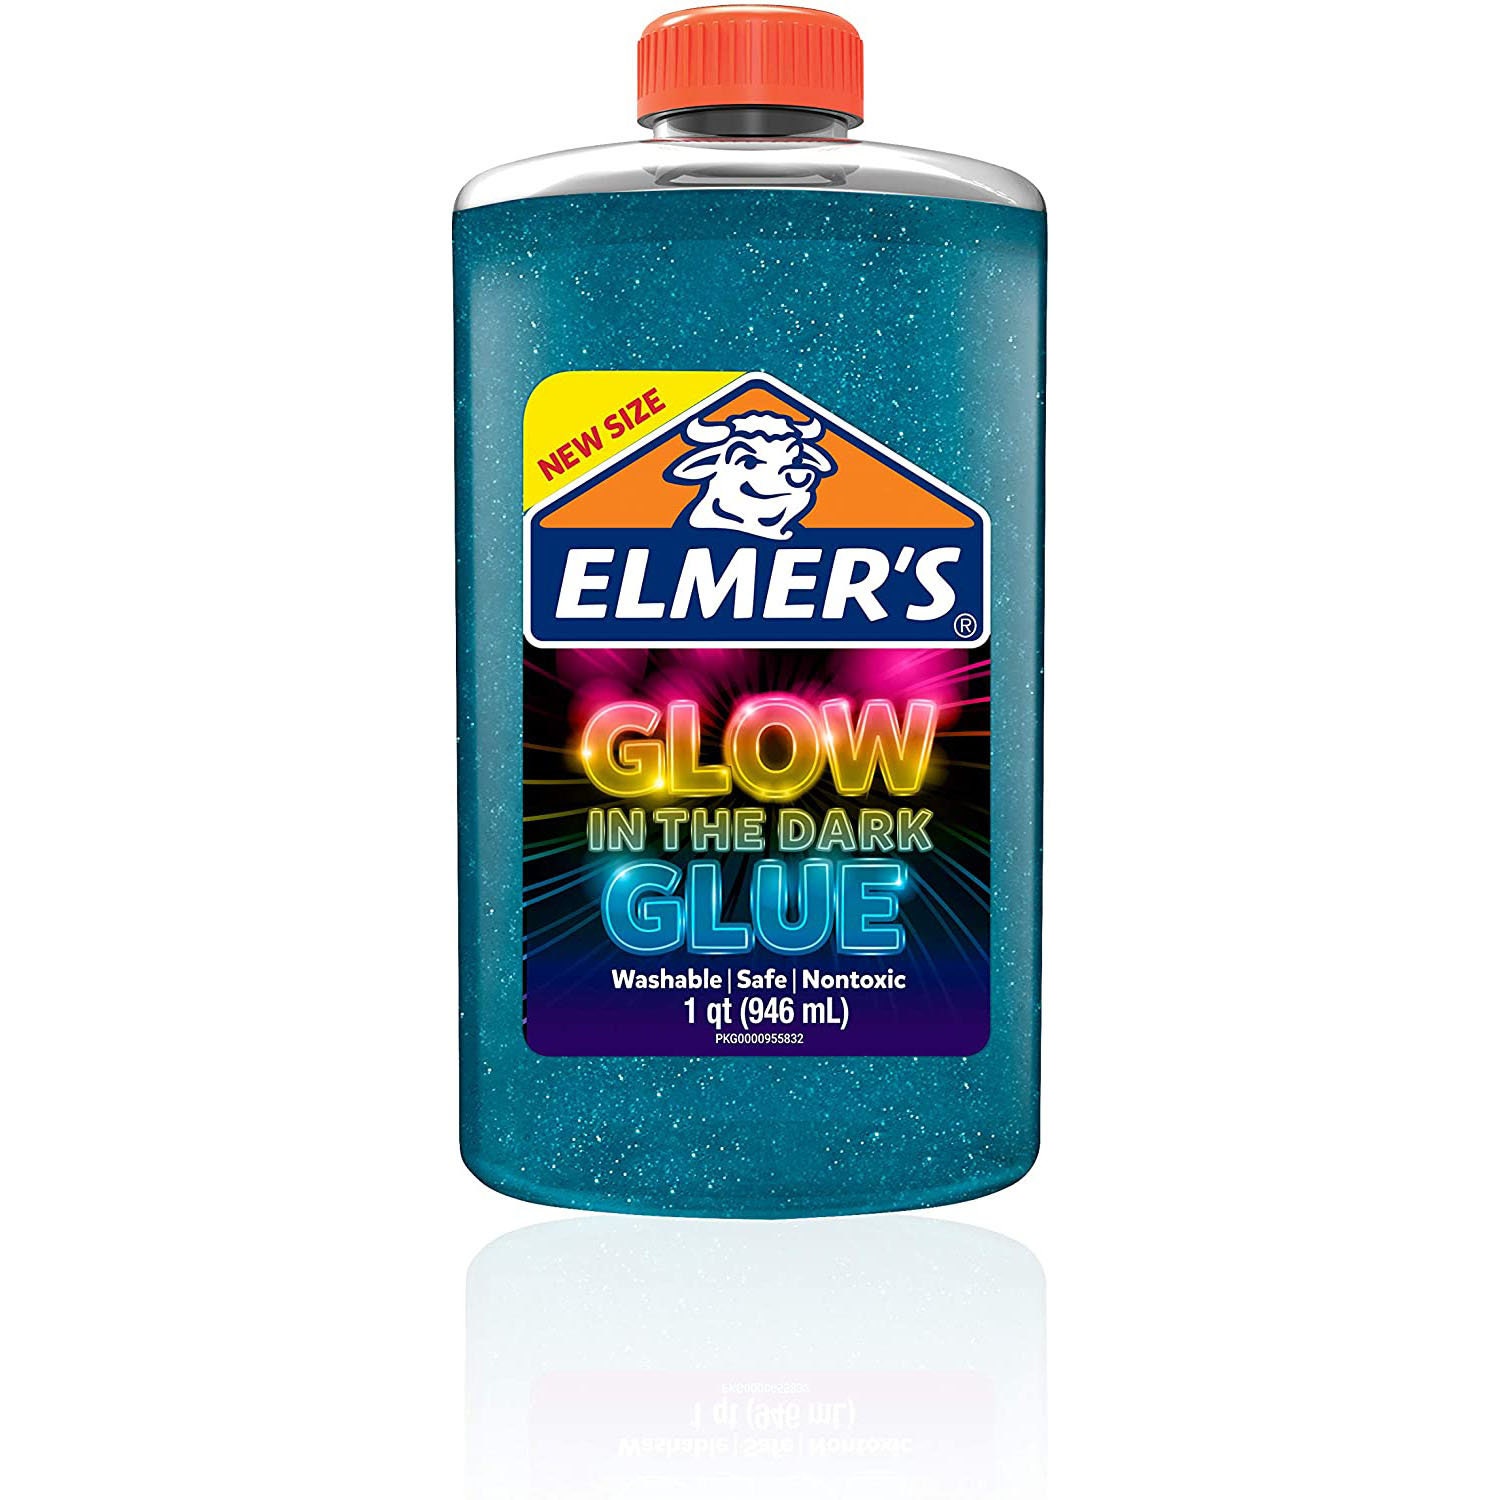 Elmer's Slime Kit W/Magical Liquid-Glow In The Dark, 1 count